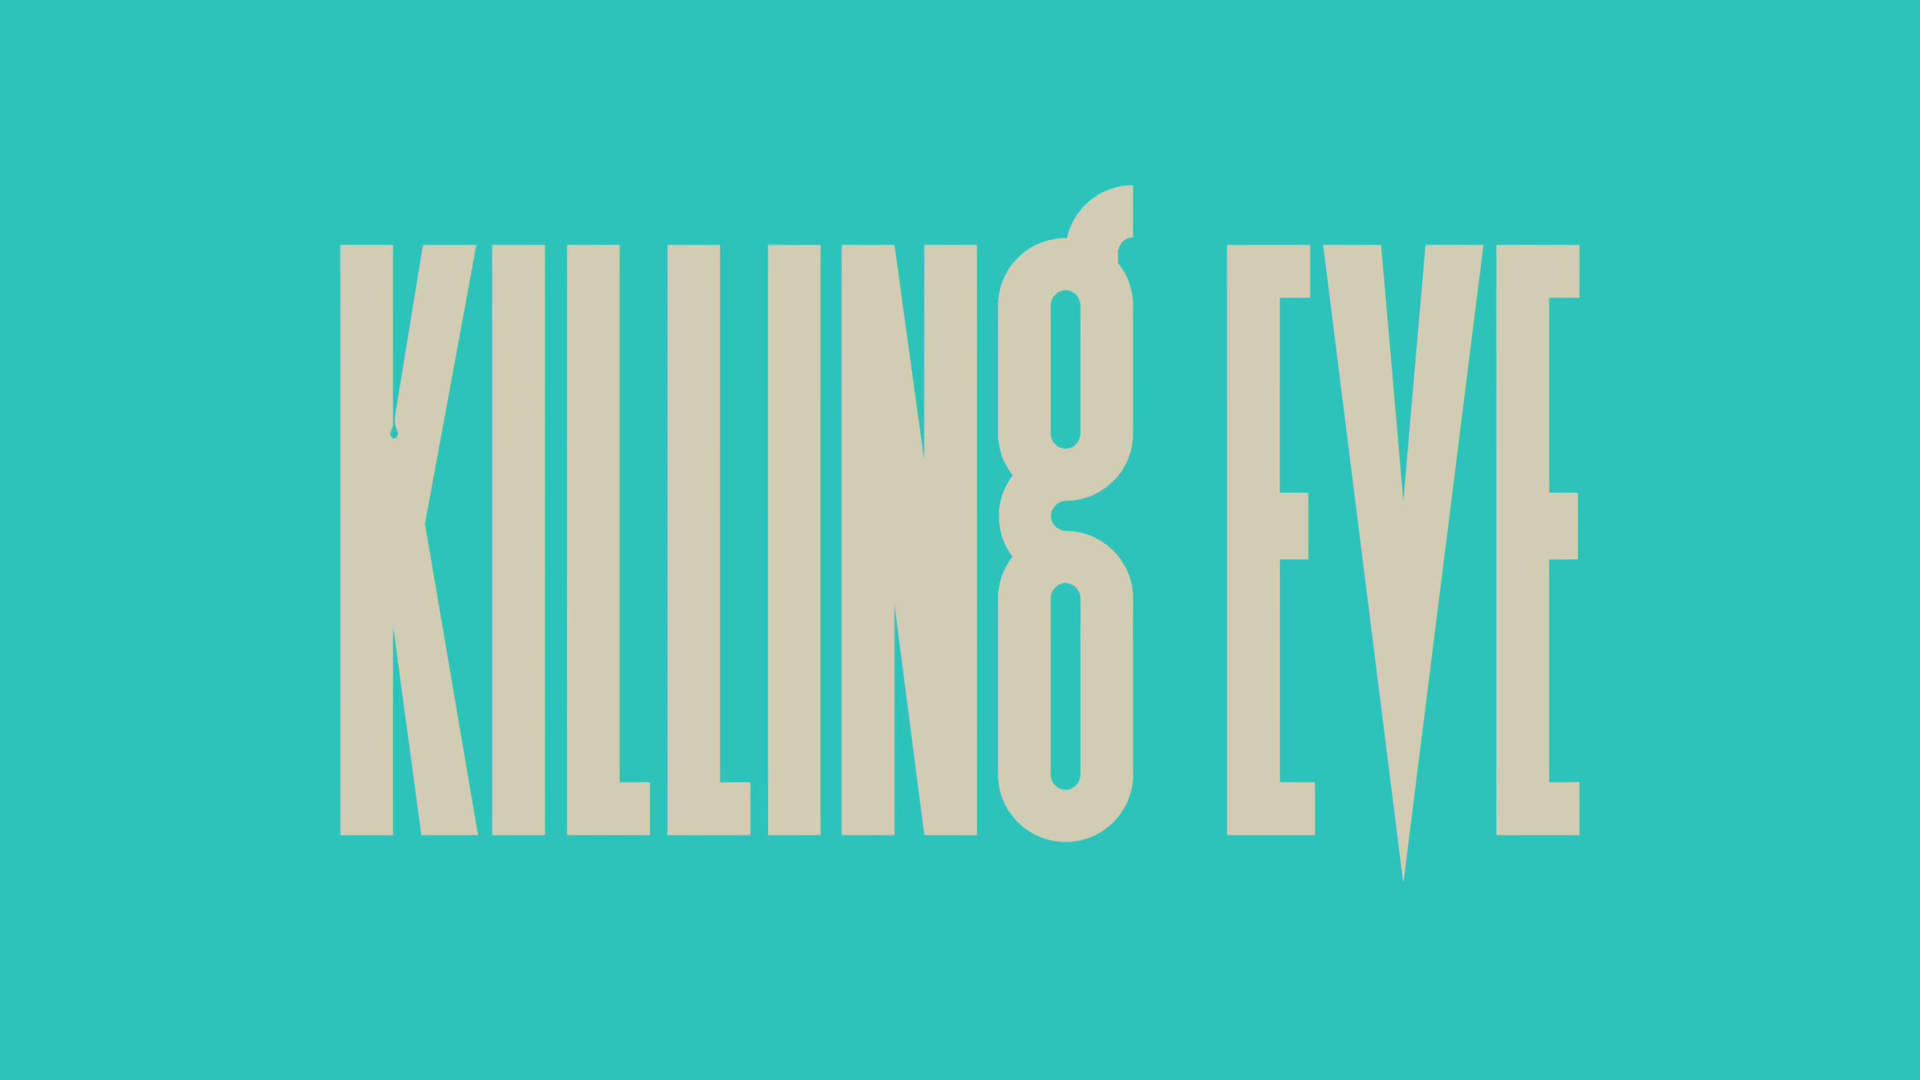 Killing Eve Turquoise Poster Wallpaper